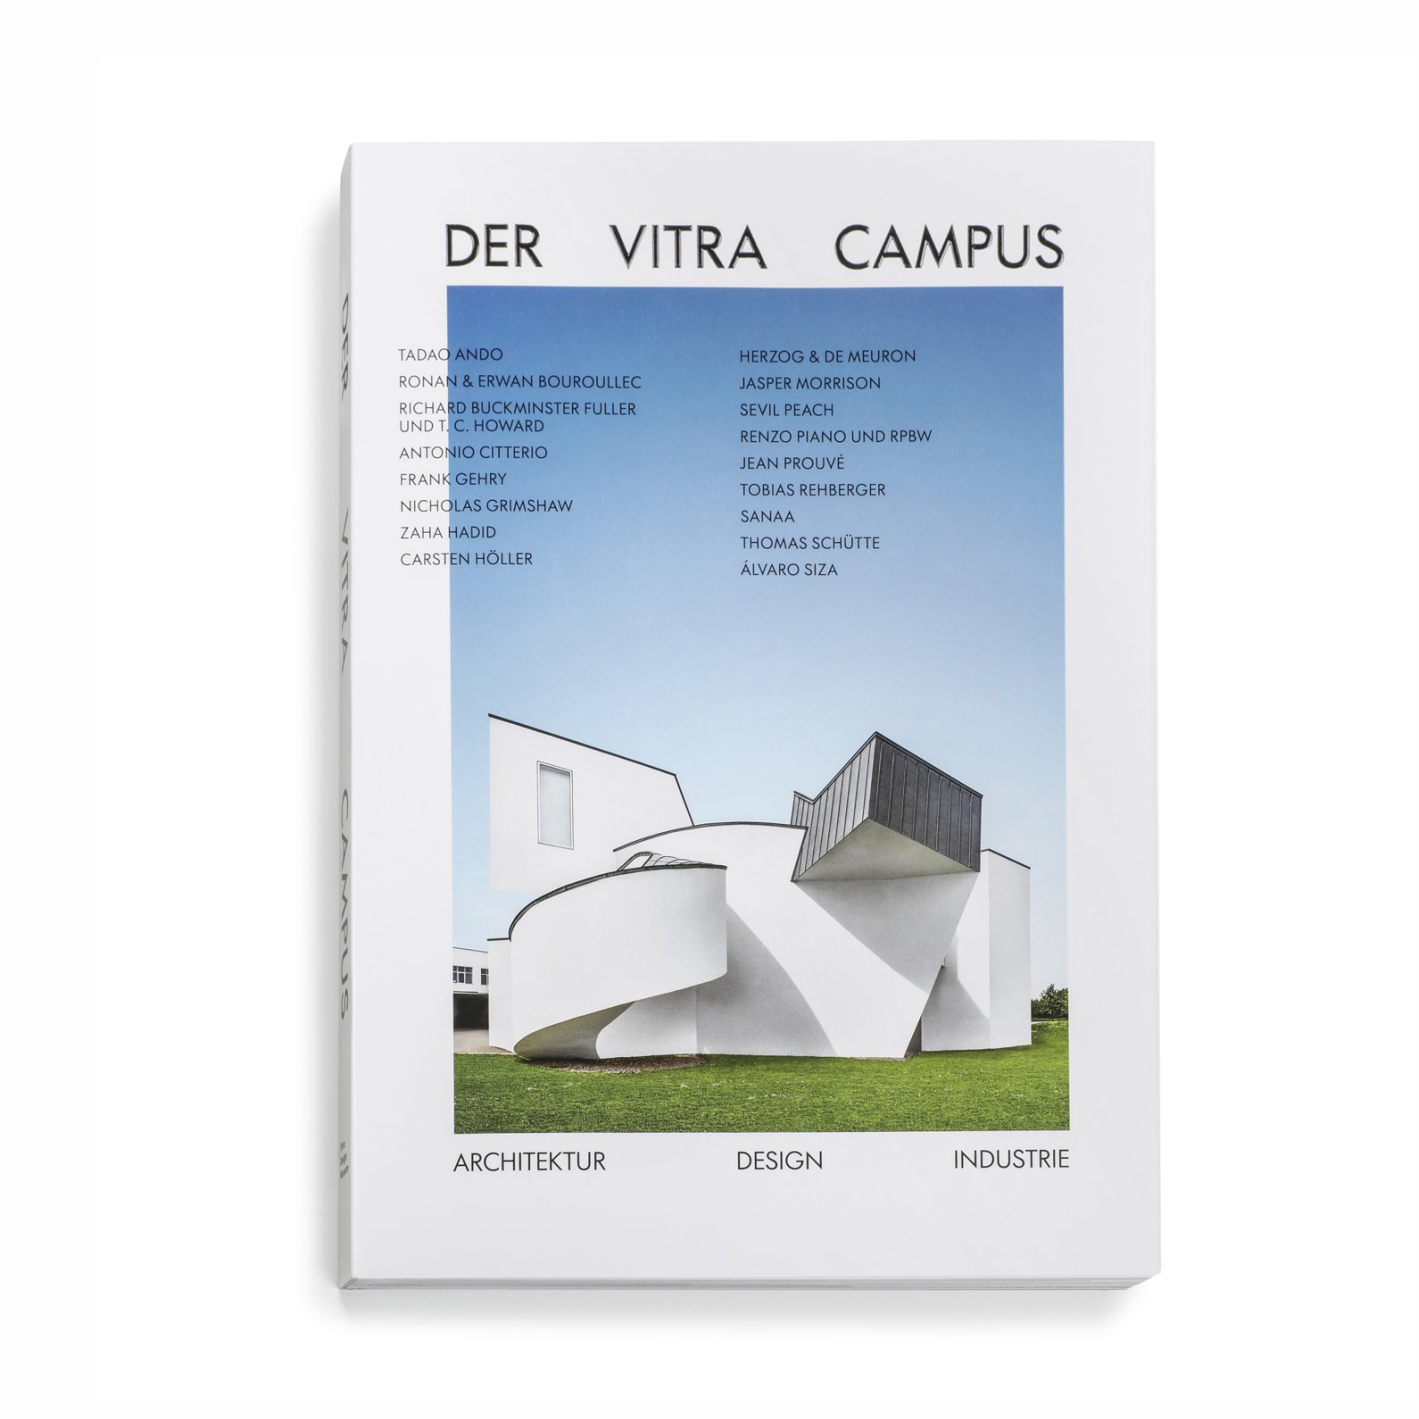 VDM Publication | The Vitra Campus: Architecture Design Industry